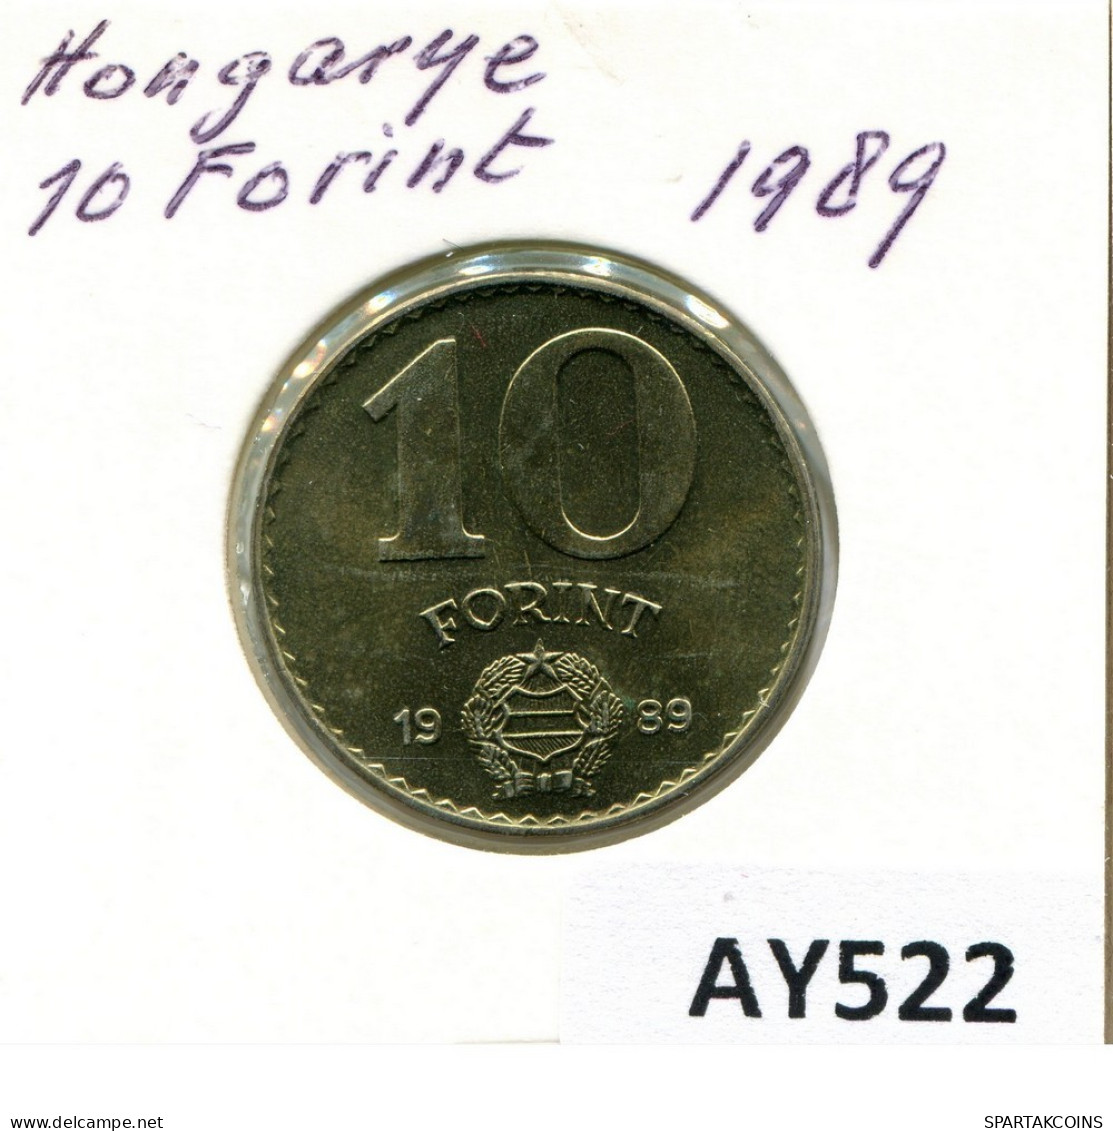 10 FORINT 1989 HUNGARY Coin #AY522.U.A - Ungarn